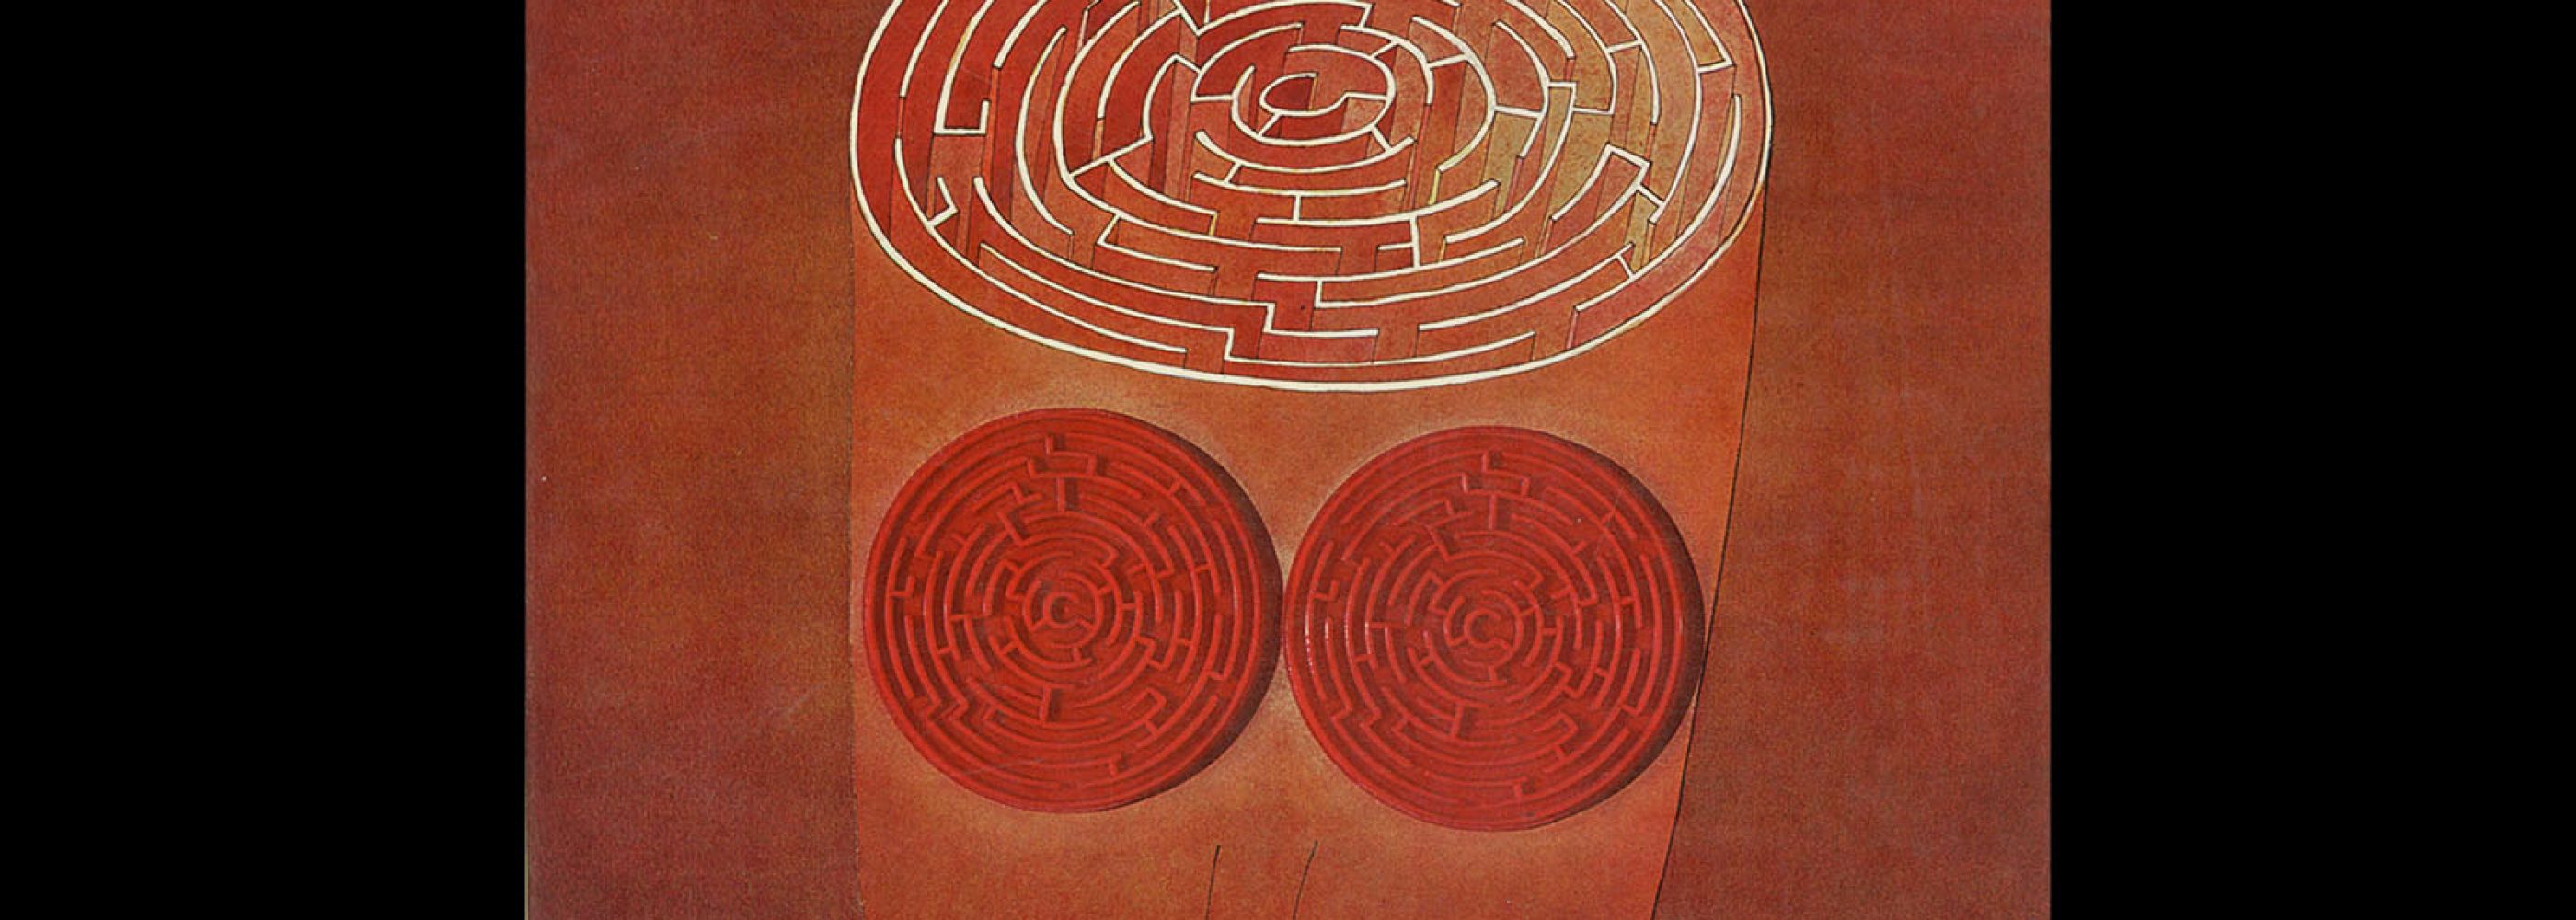 Graphis 130, 1967. Cover design by Jean Michel Folon.